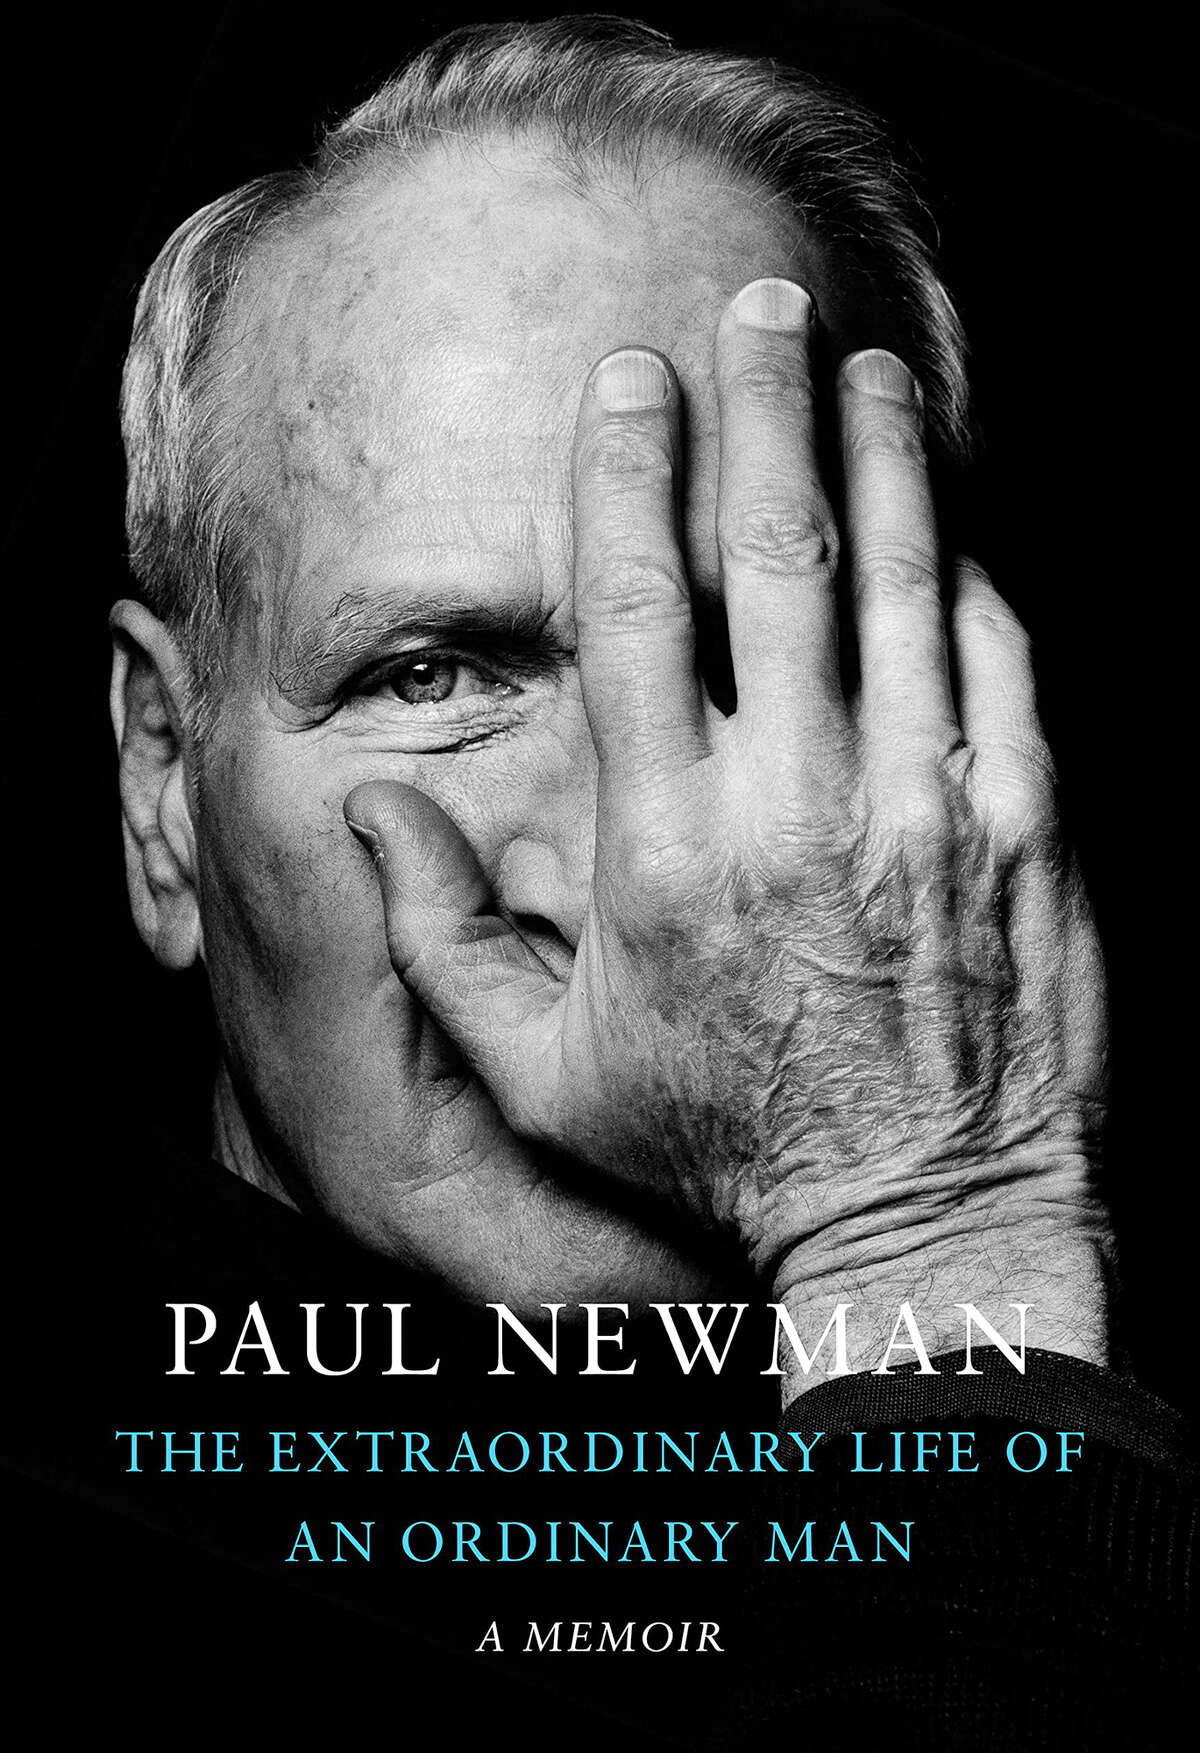 "Paul Newman: The Extraordinary Life of an Ordinary Man"